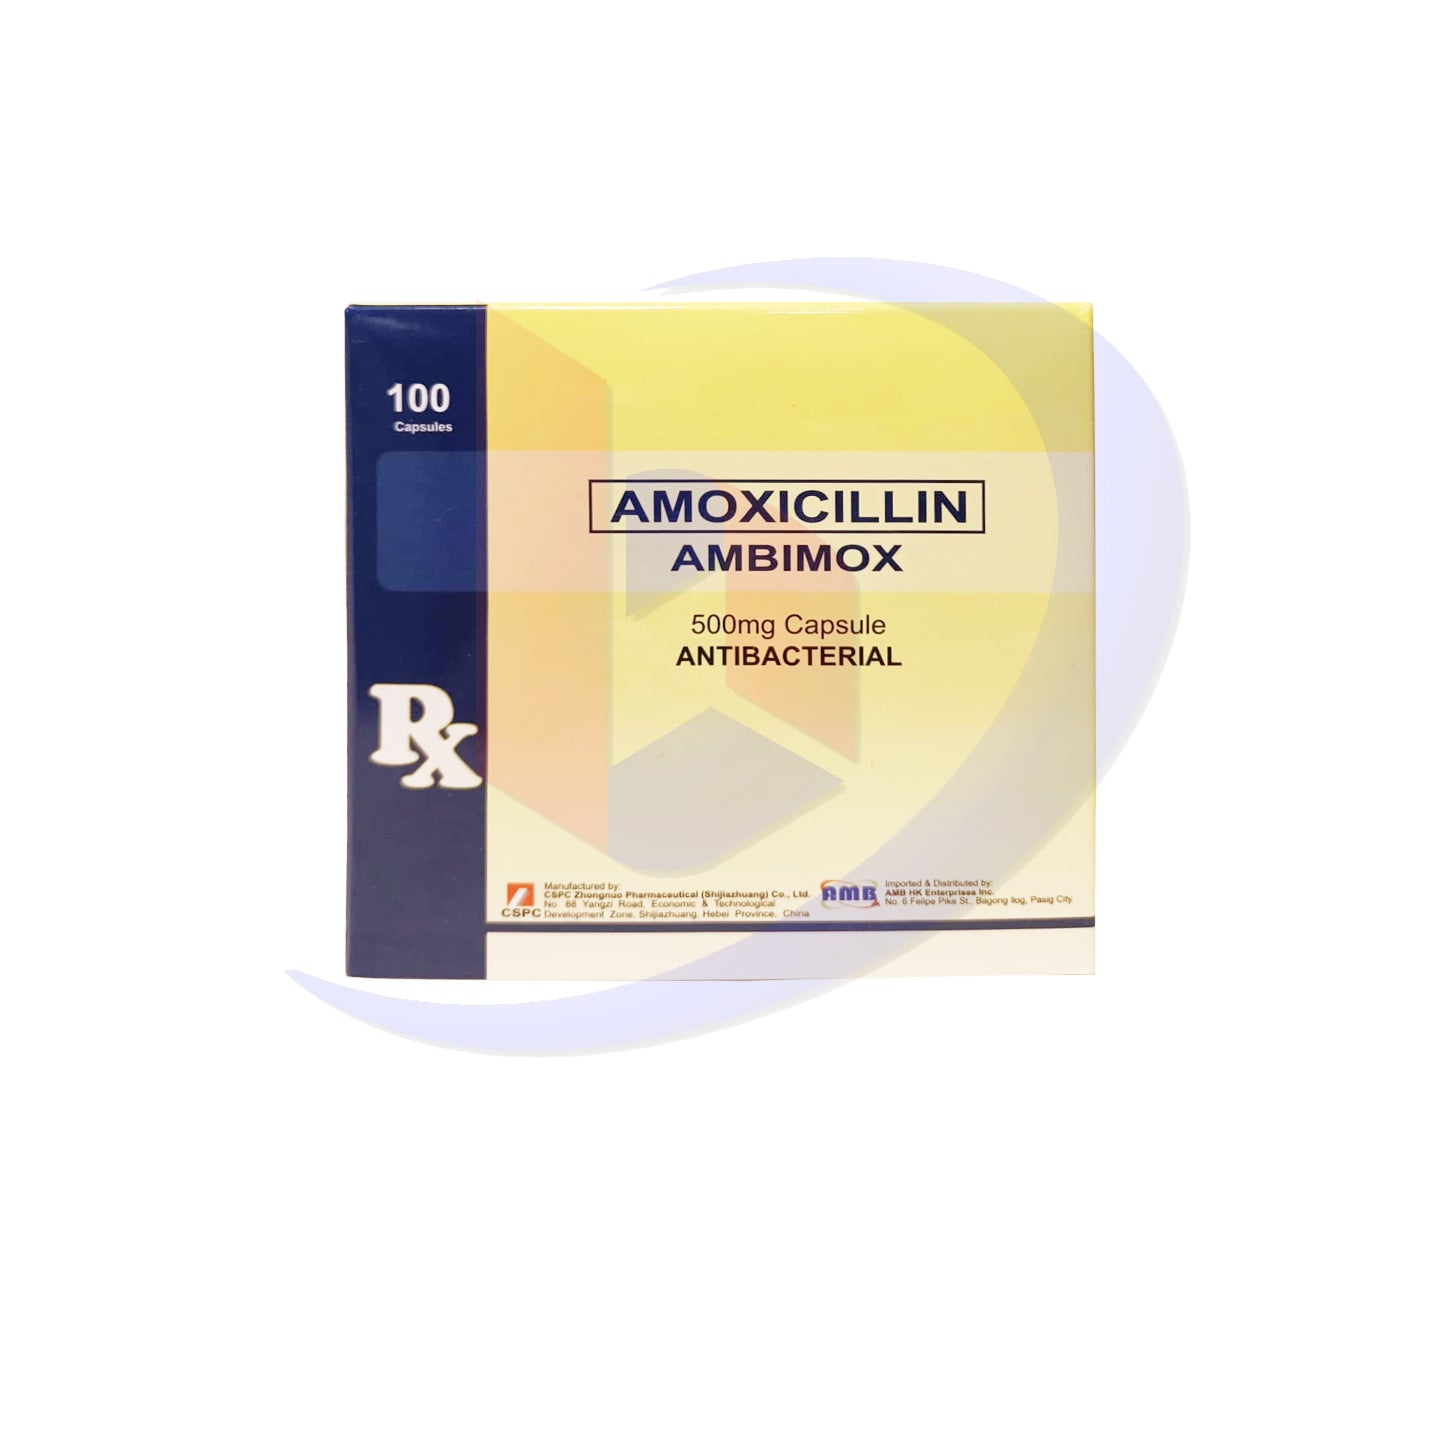 Amoxicillin (Ambimox) 500mg Capsule 100's